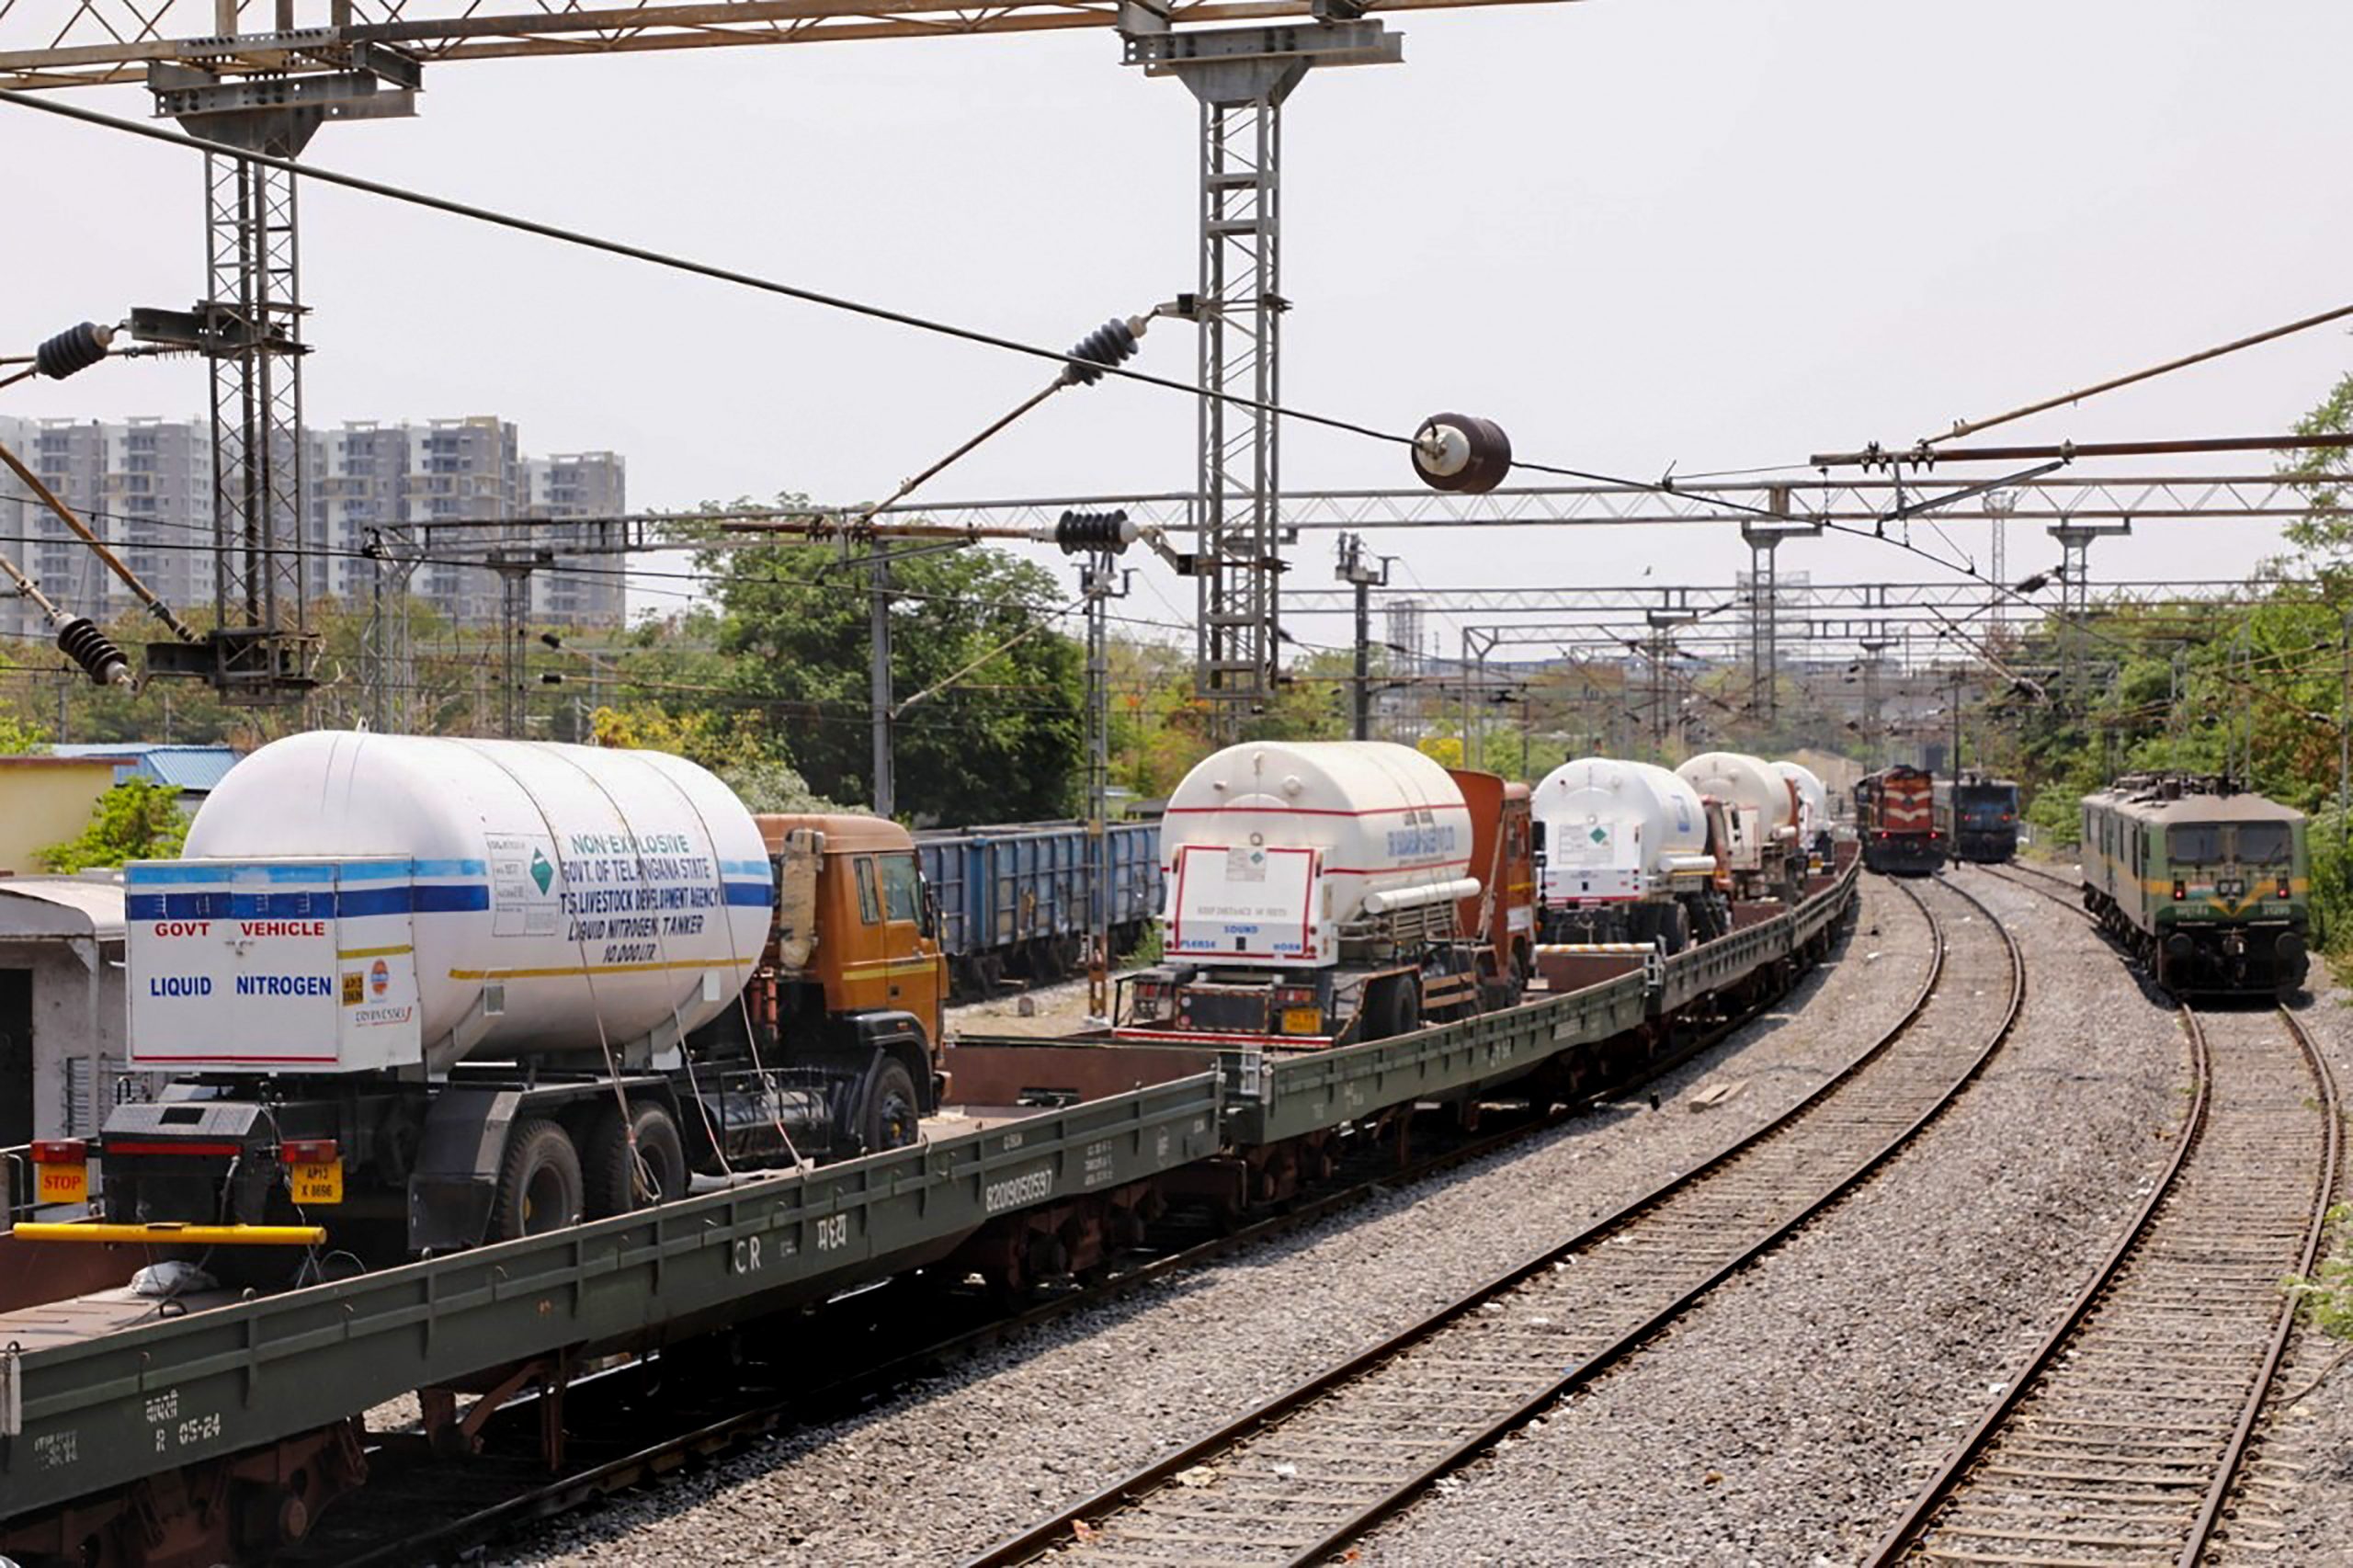 Delhi to receive 205 tonnes of oxygen by Tuesday: Railways